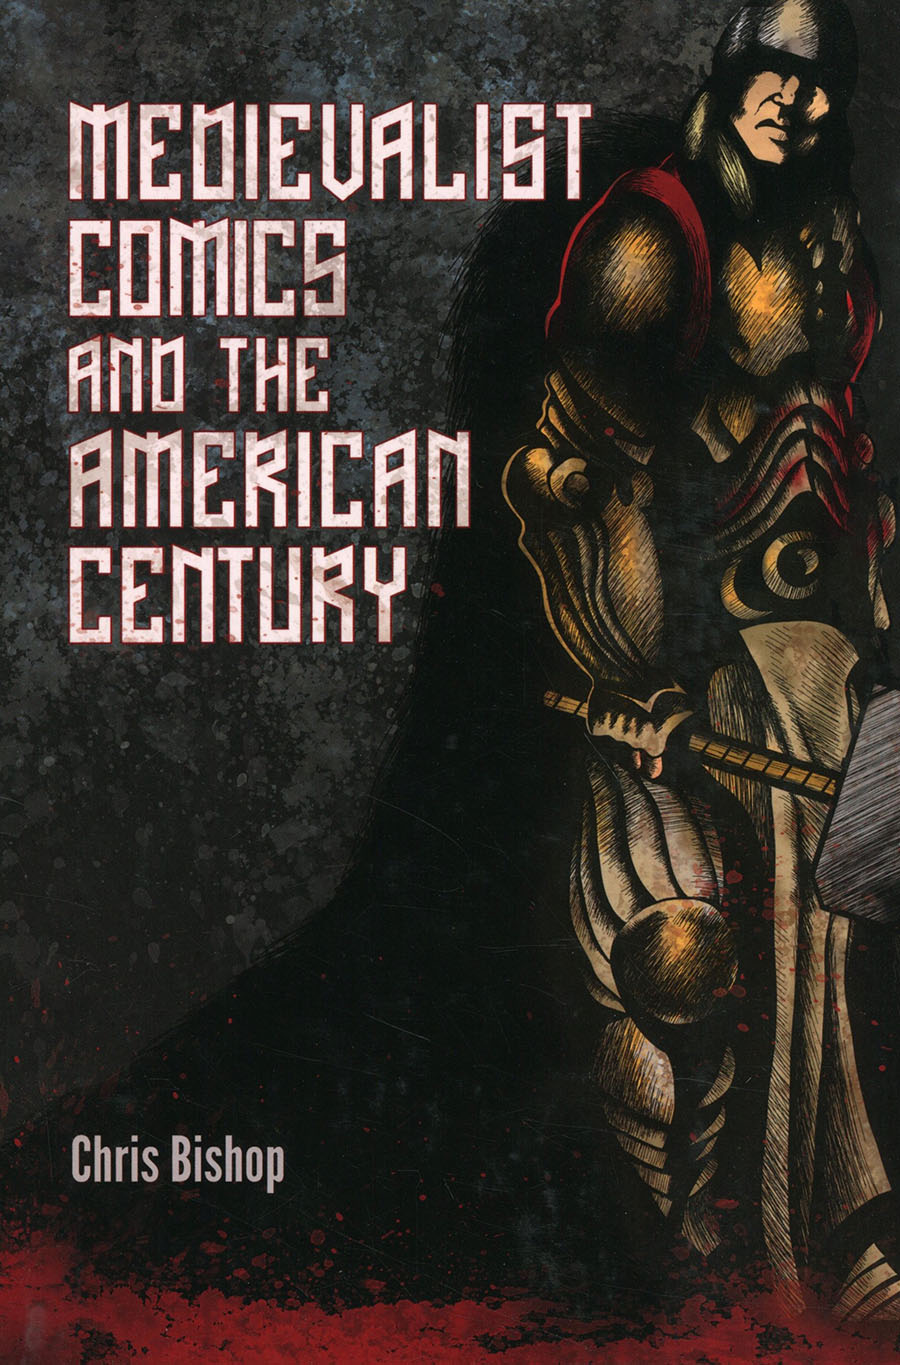 Medievalist Comics And The American Century SC